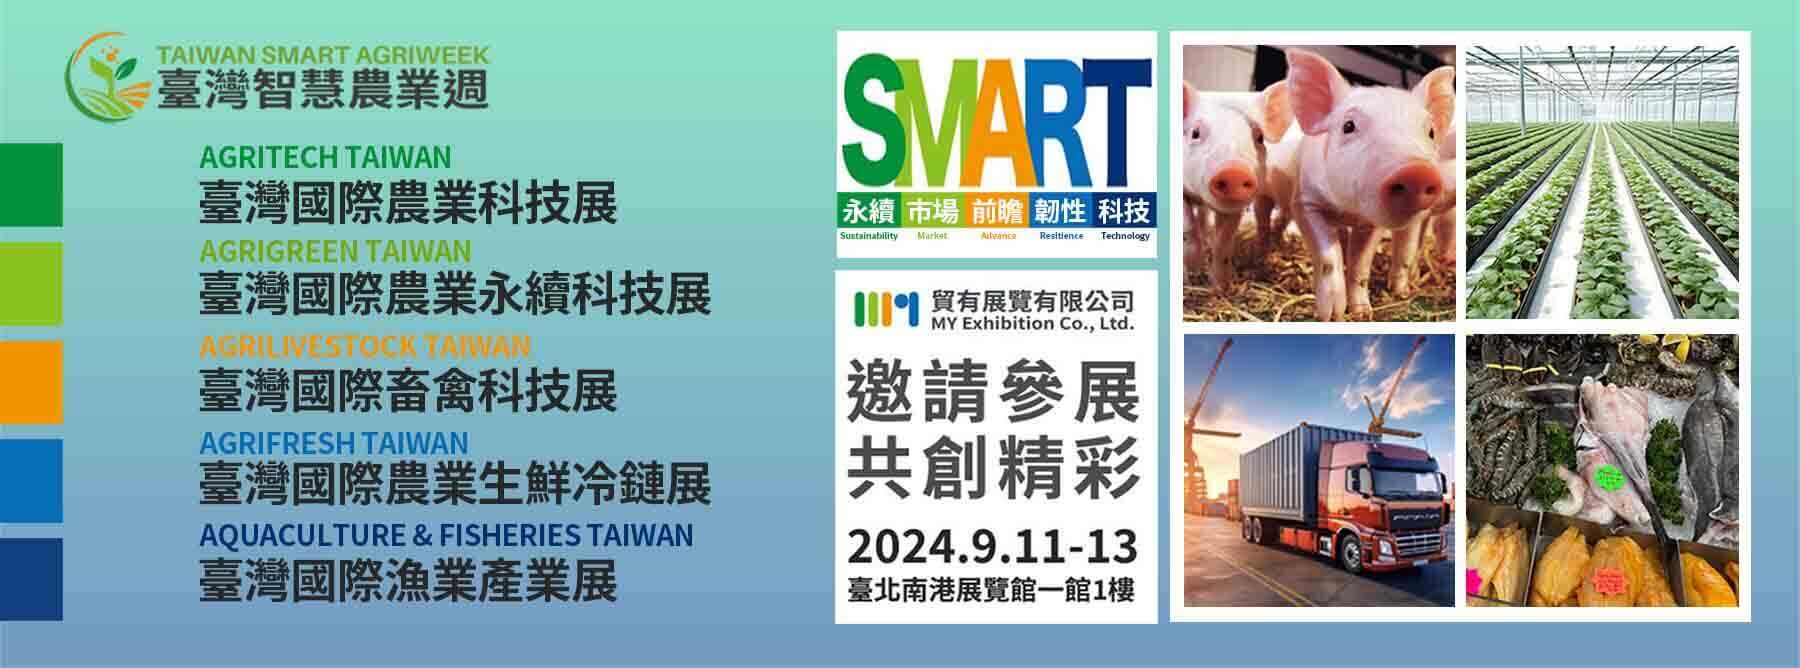 Taiwan Smart Agriweek 2024